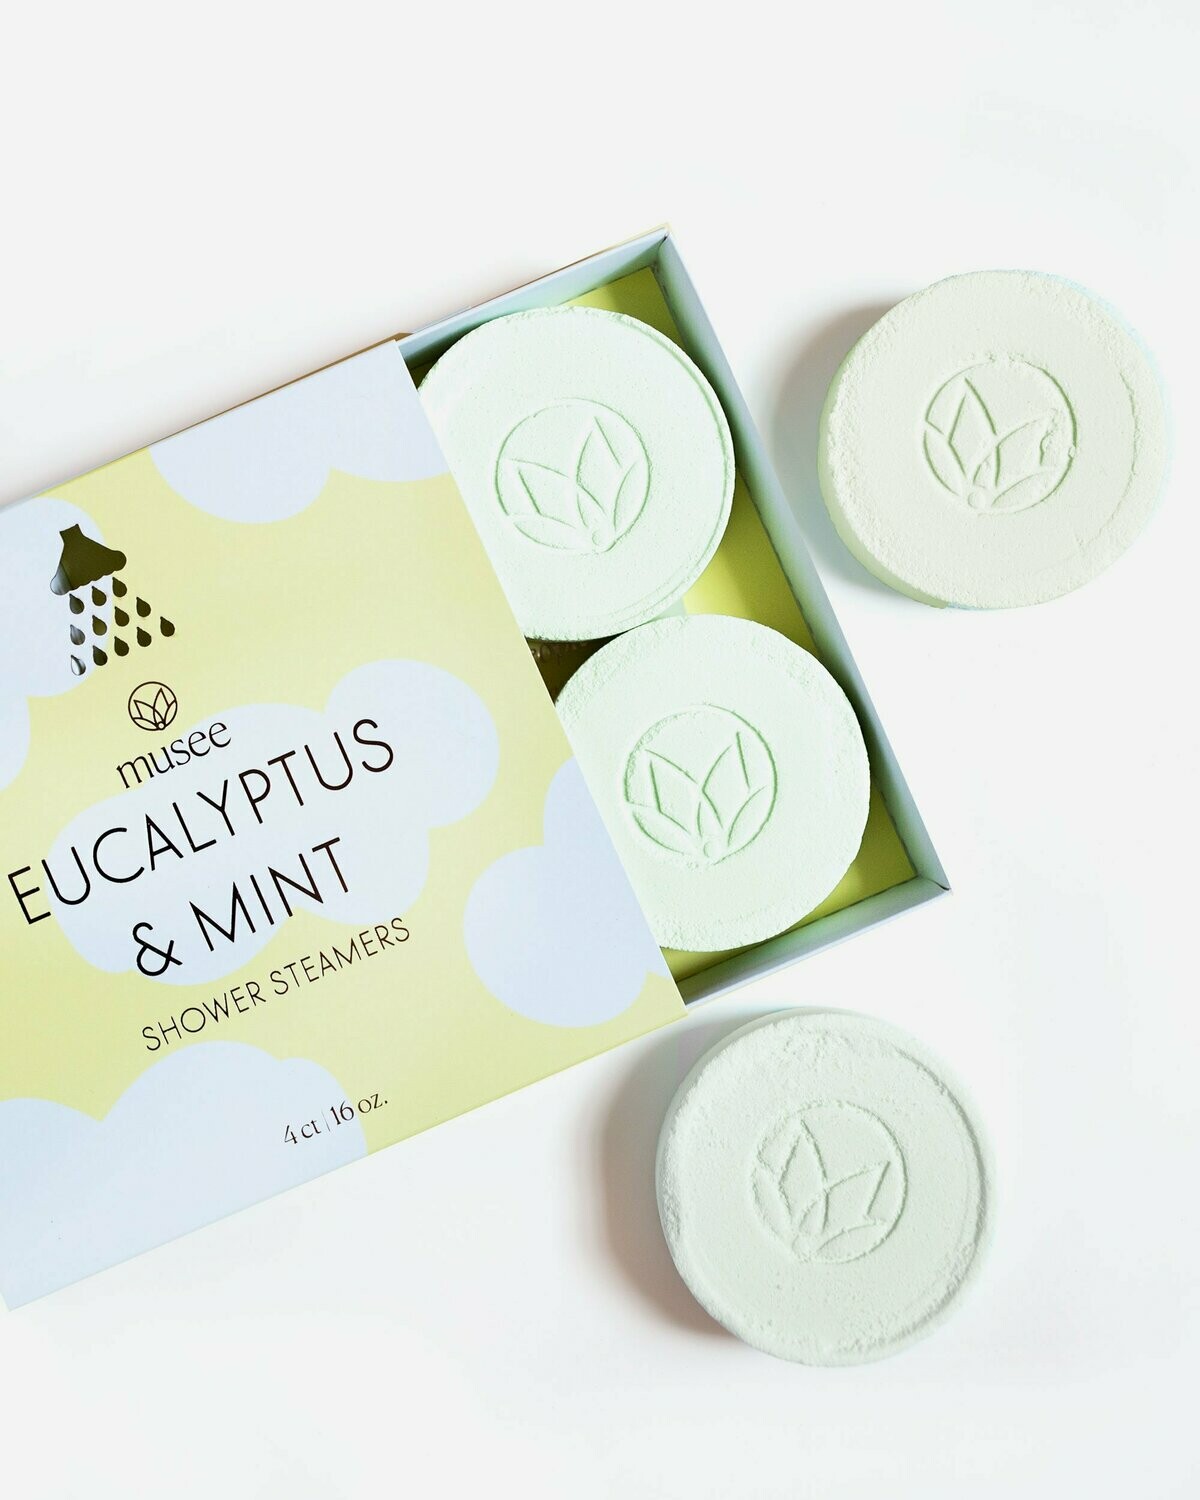 Shower Steams- Eucalyptus Mint 